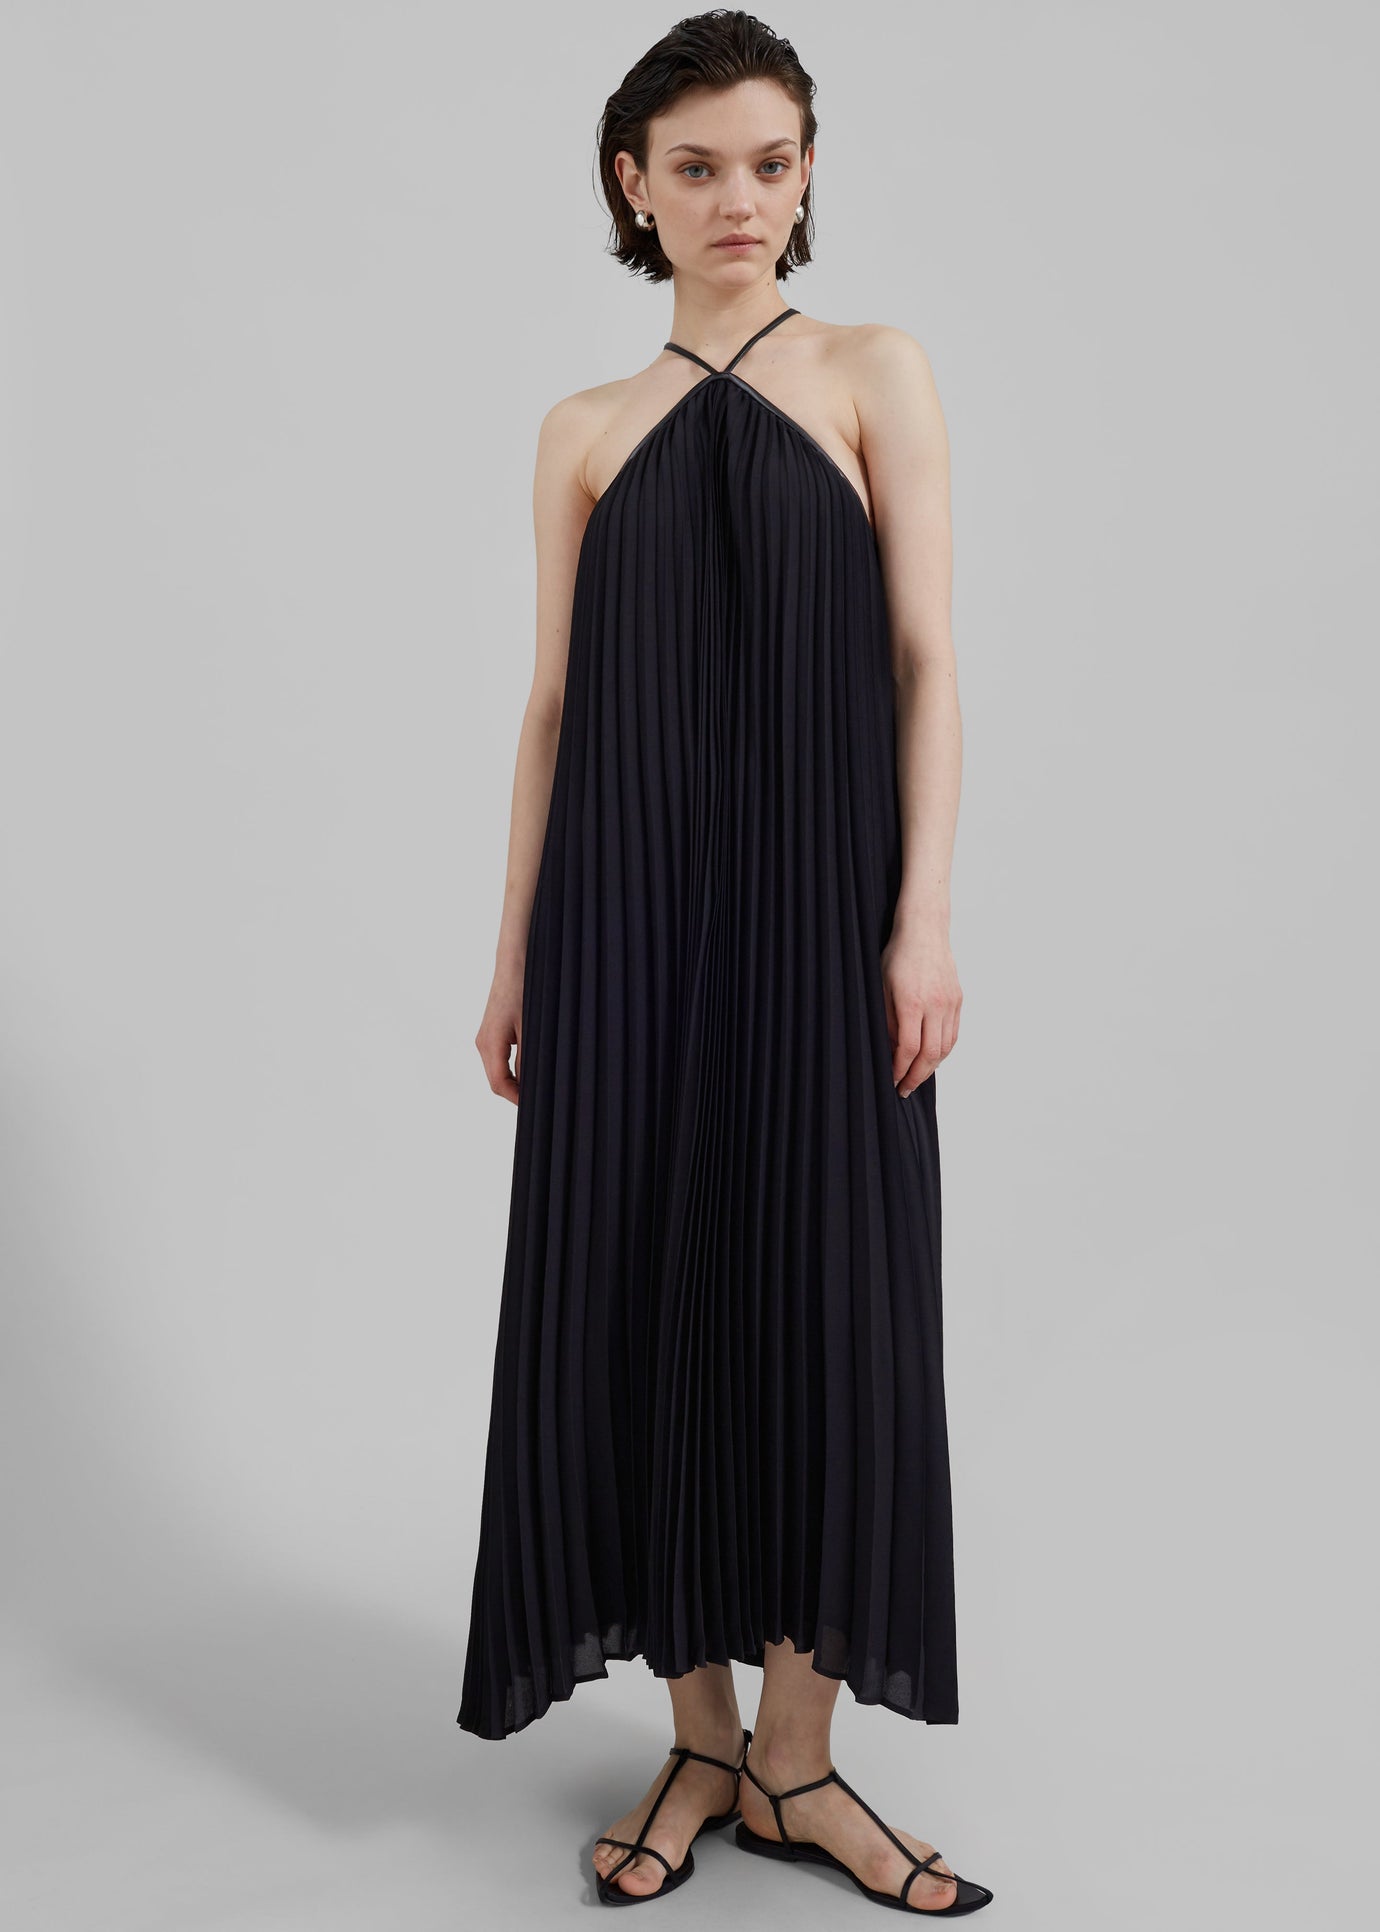 Proenza Schouler White Label Celeste Lightweight Crepe Dress  - Black